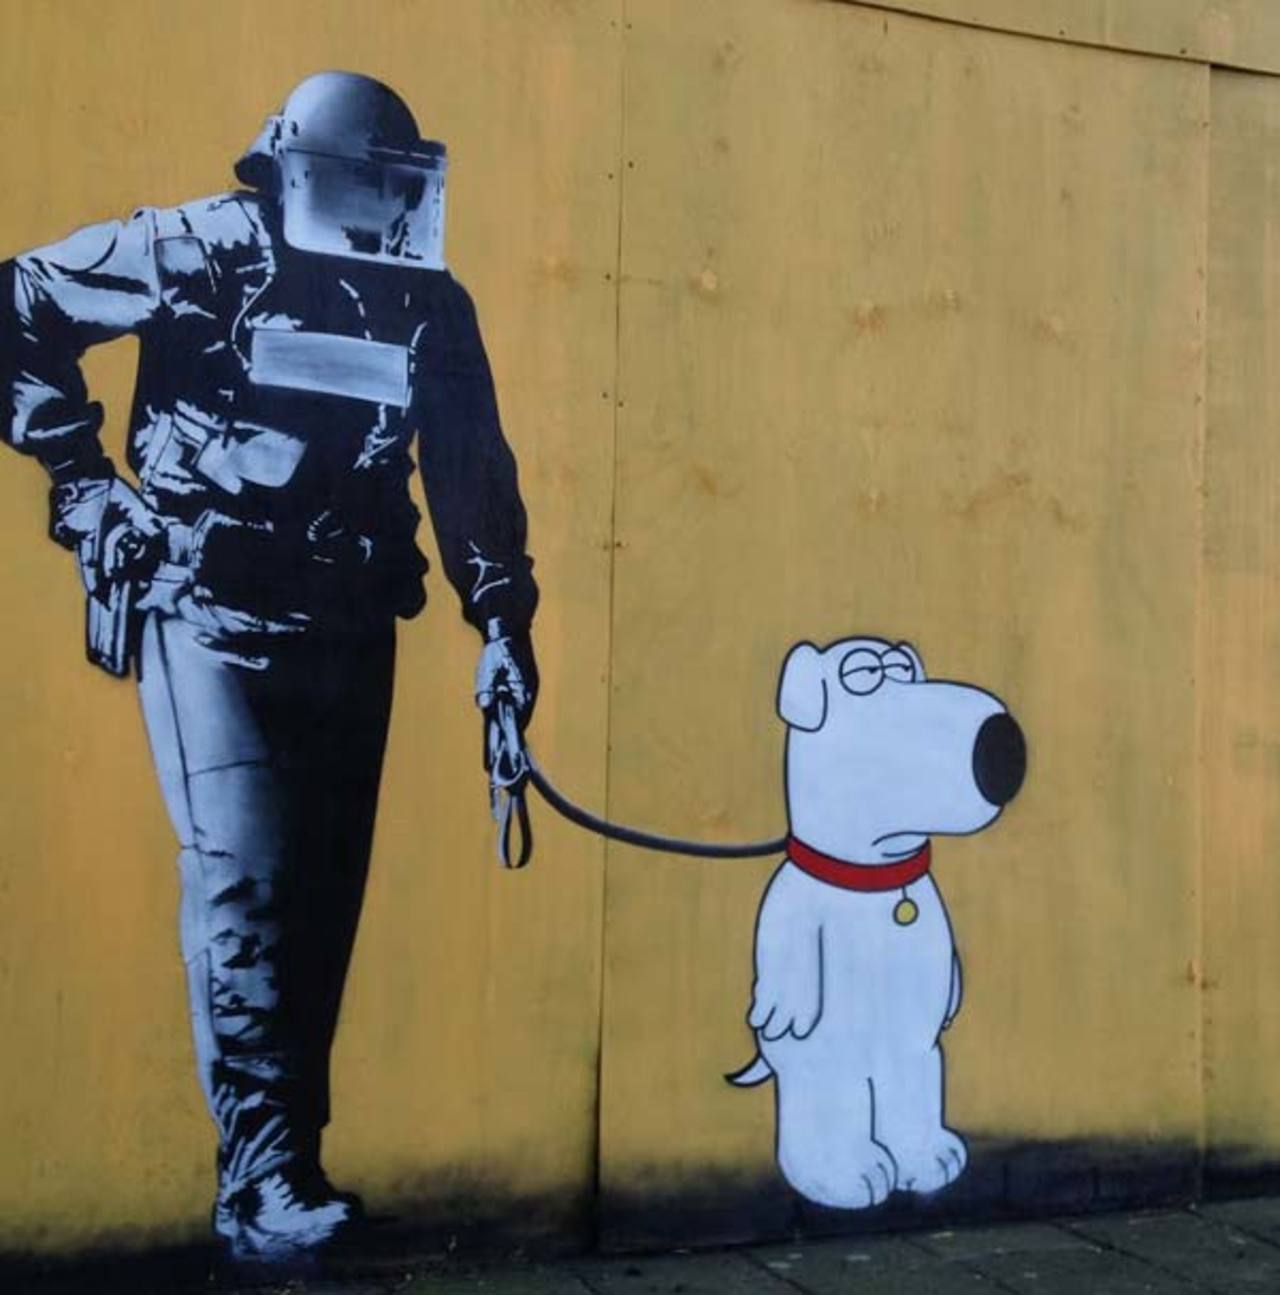 RT @hmed80: “@hypatia373: #art #streetart #graffiti http://t.co/TJejXl0seK”